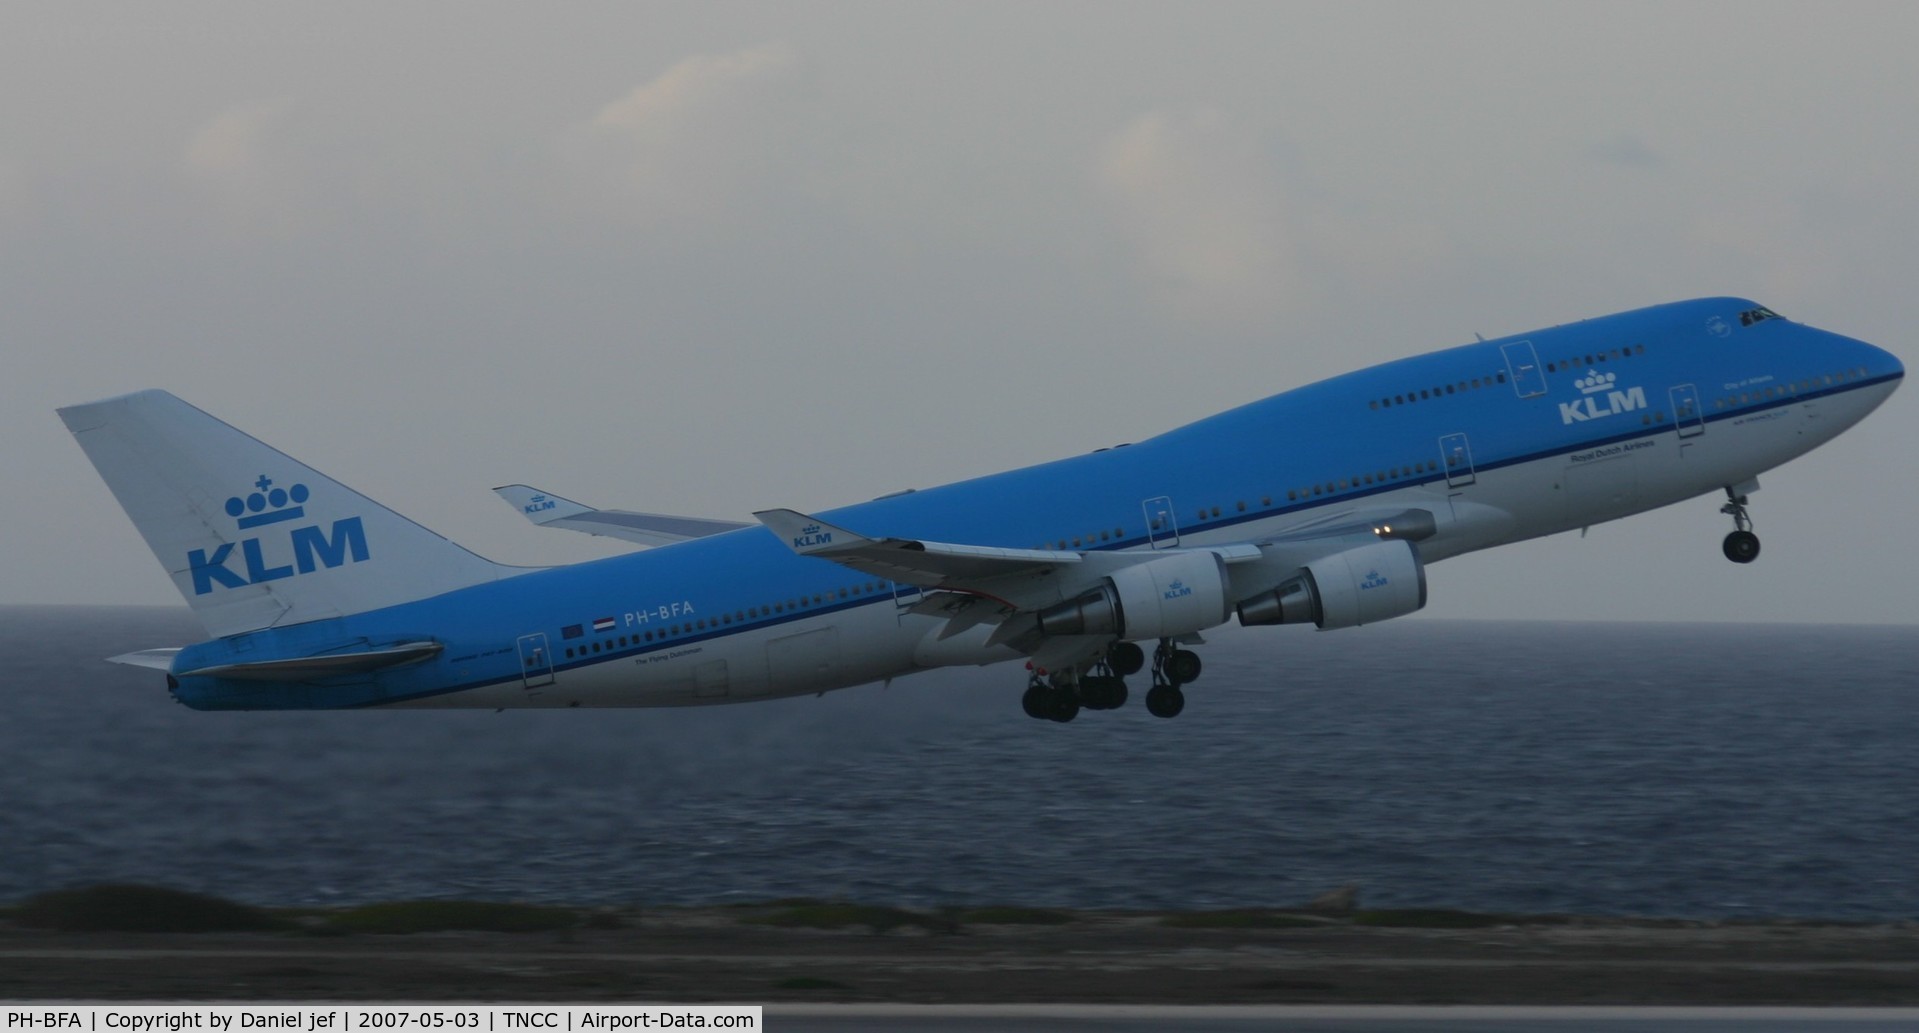 PH-BFA, 1989 Boeing 747-406 C/N 23999, KLM departing for holland